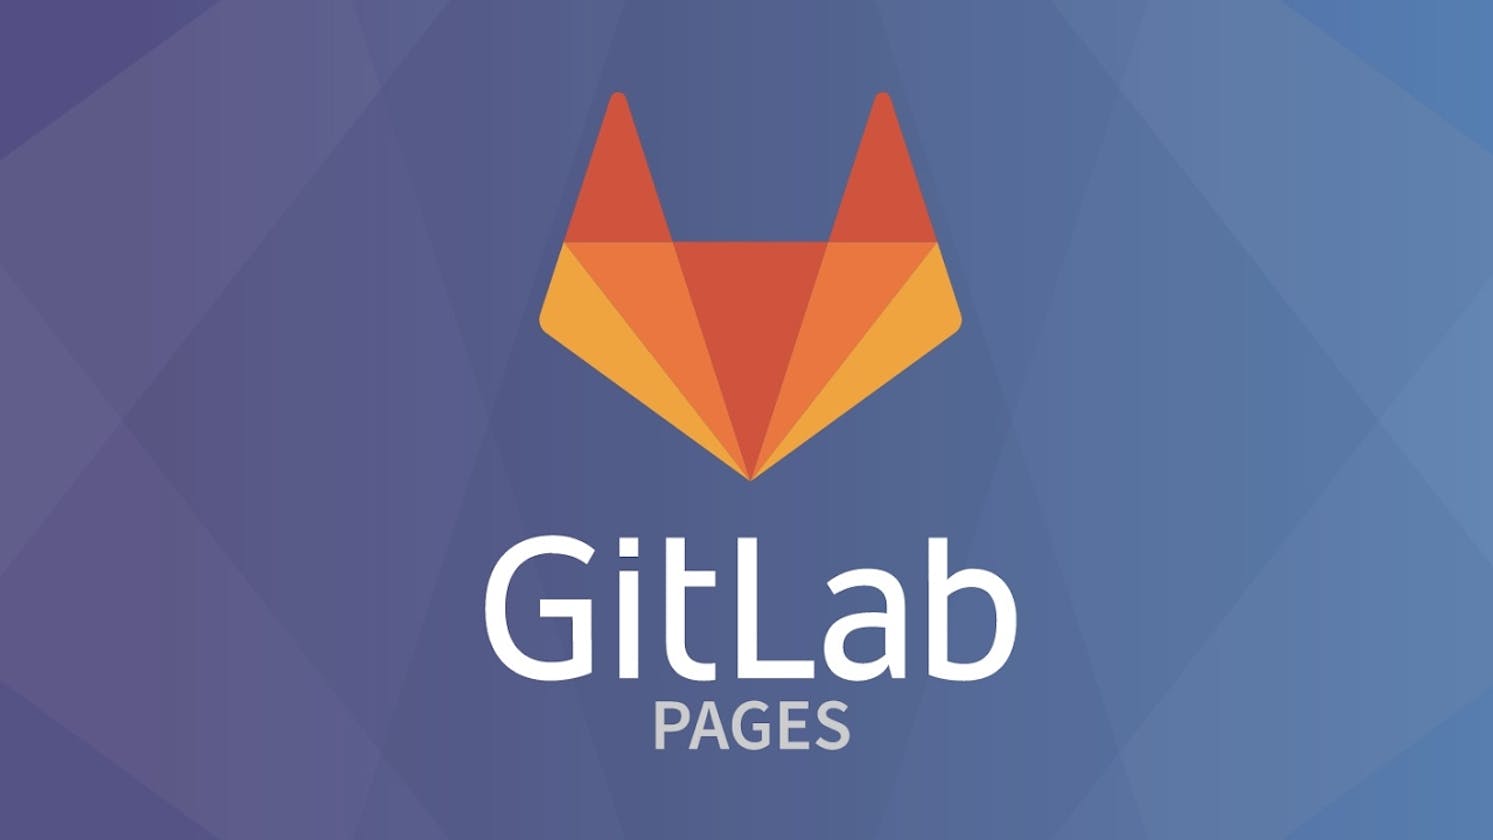 GitLab Pages: A Quick Introduction